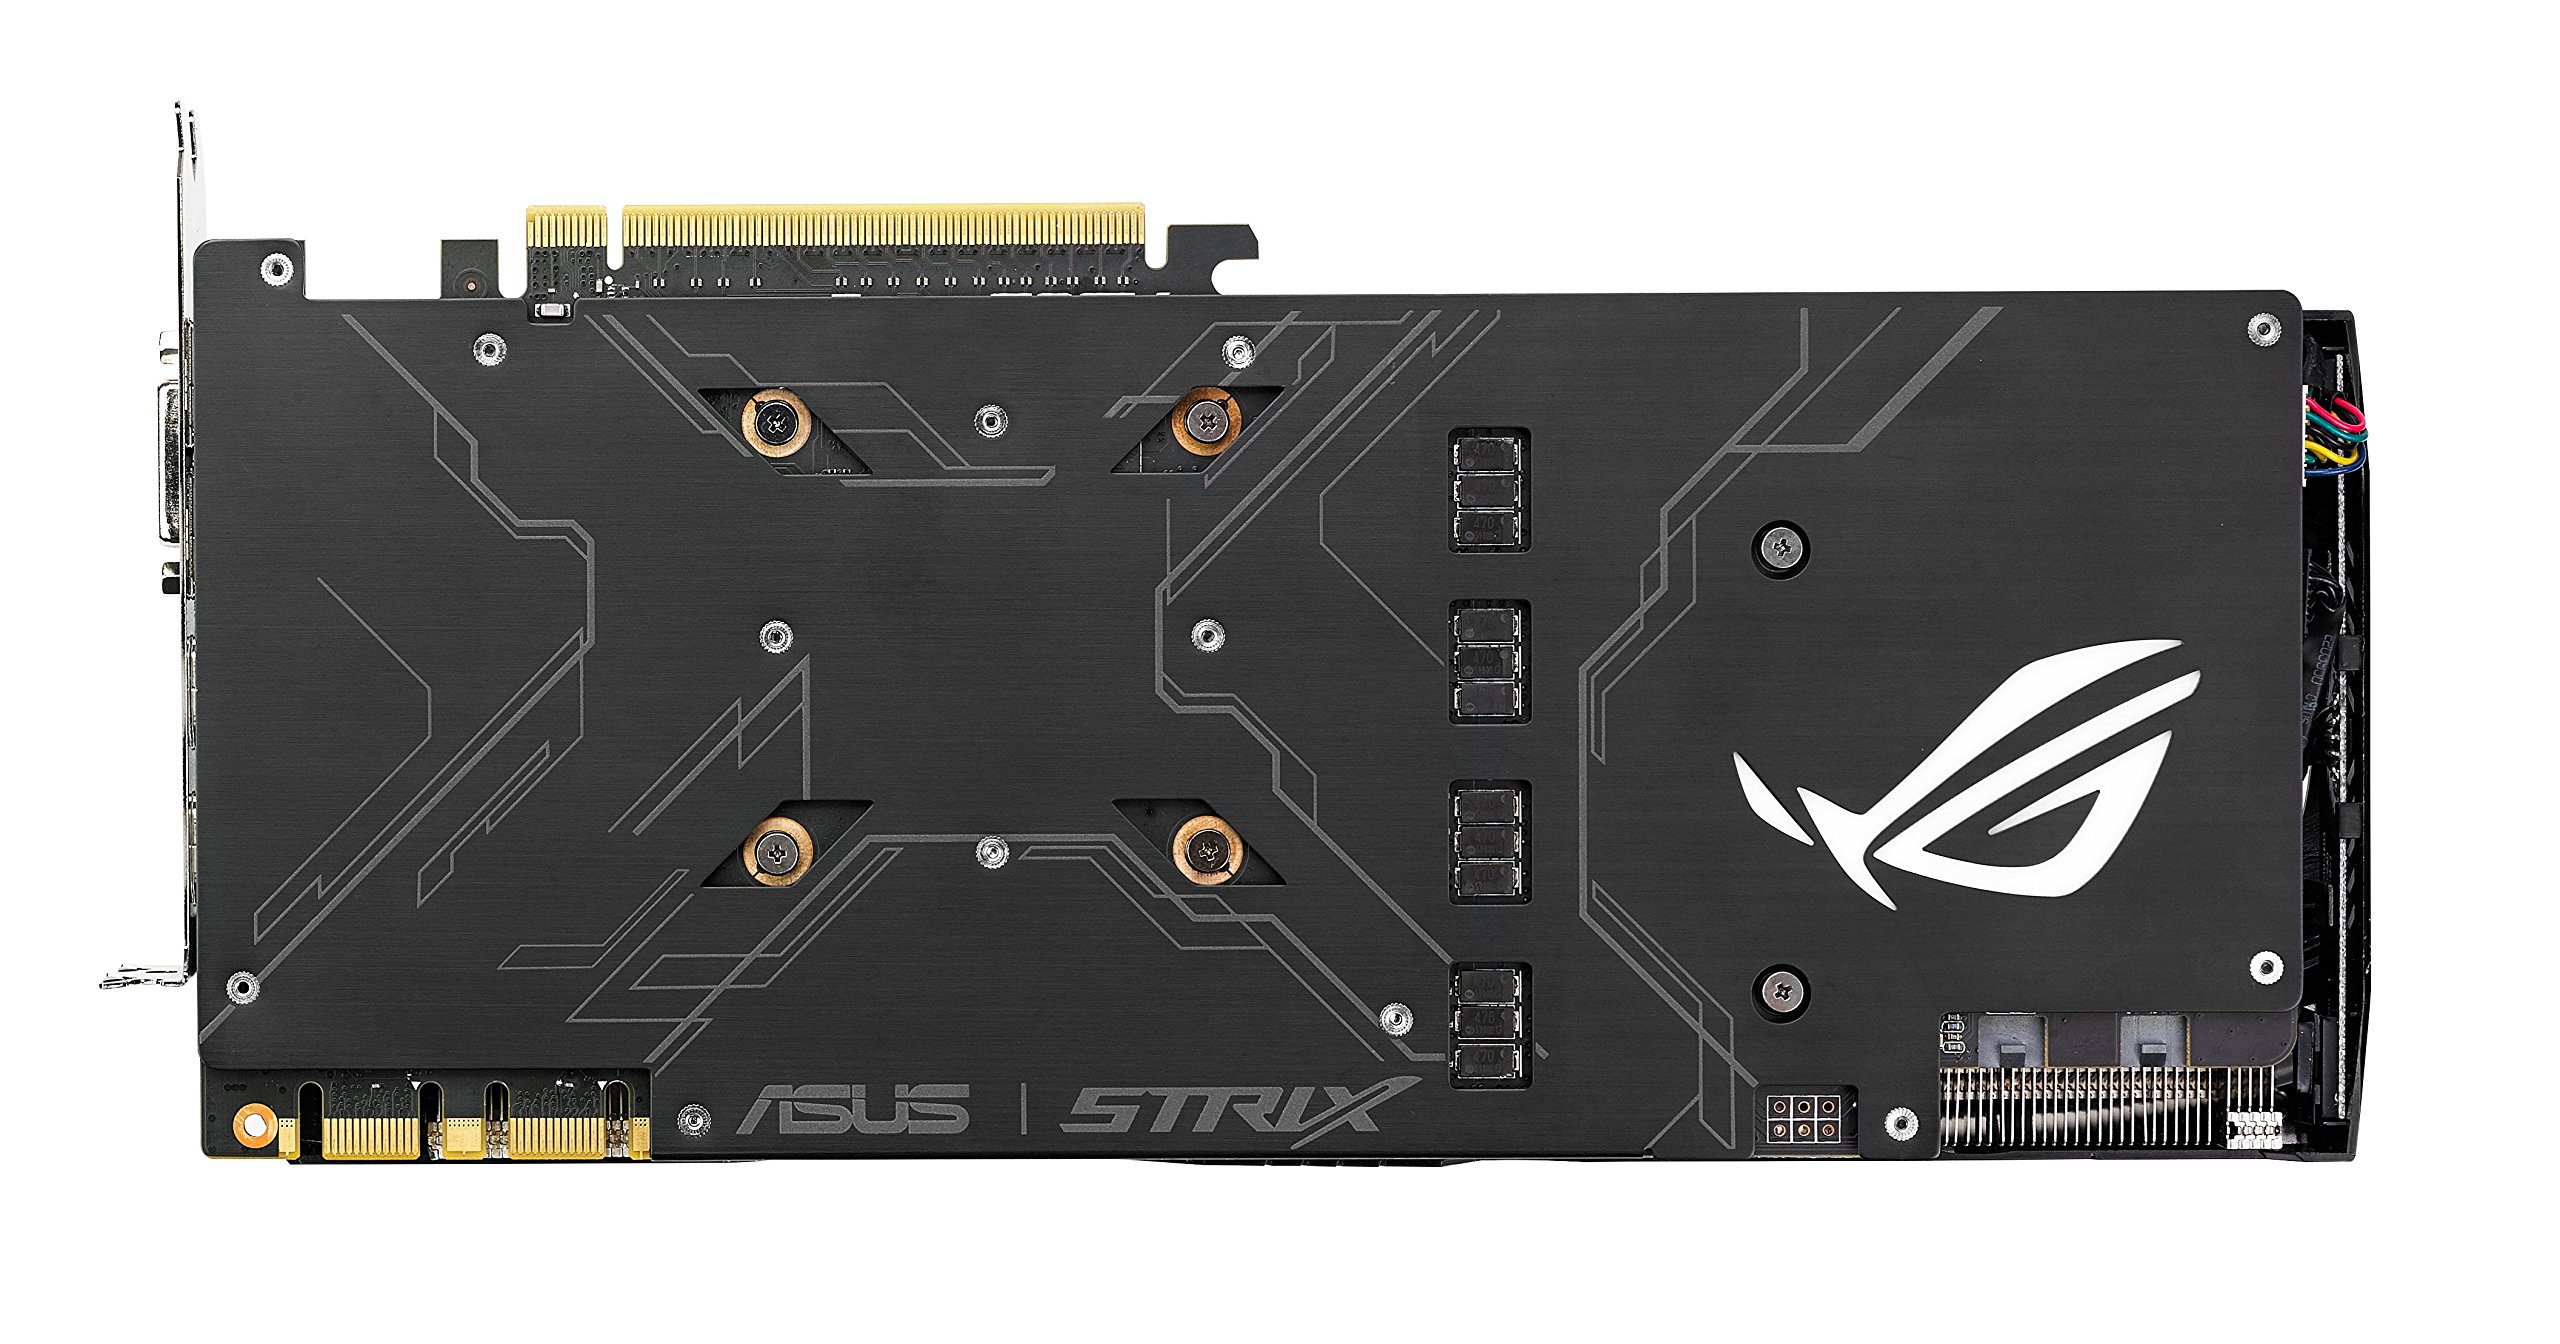 ASUS GeForce GTX 1080 8GB ROG Strix Graphics Card (STRIX-GTX1080-A8G-GAMING)